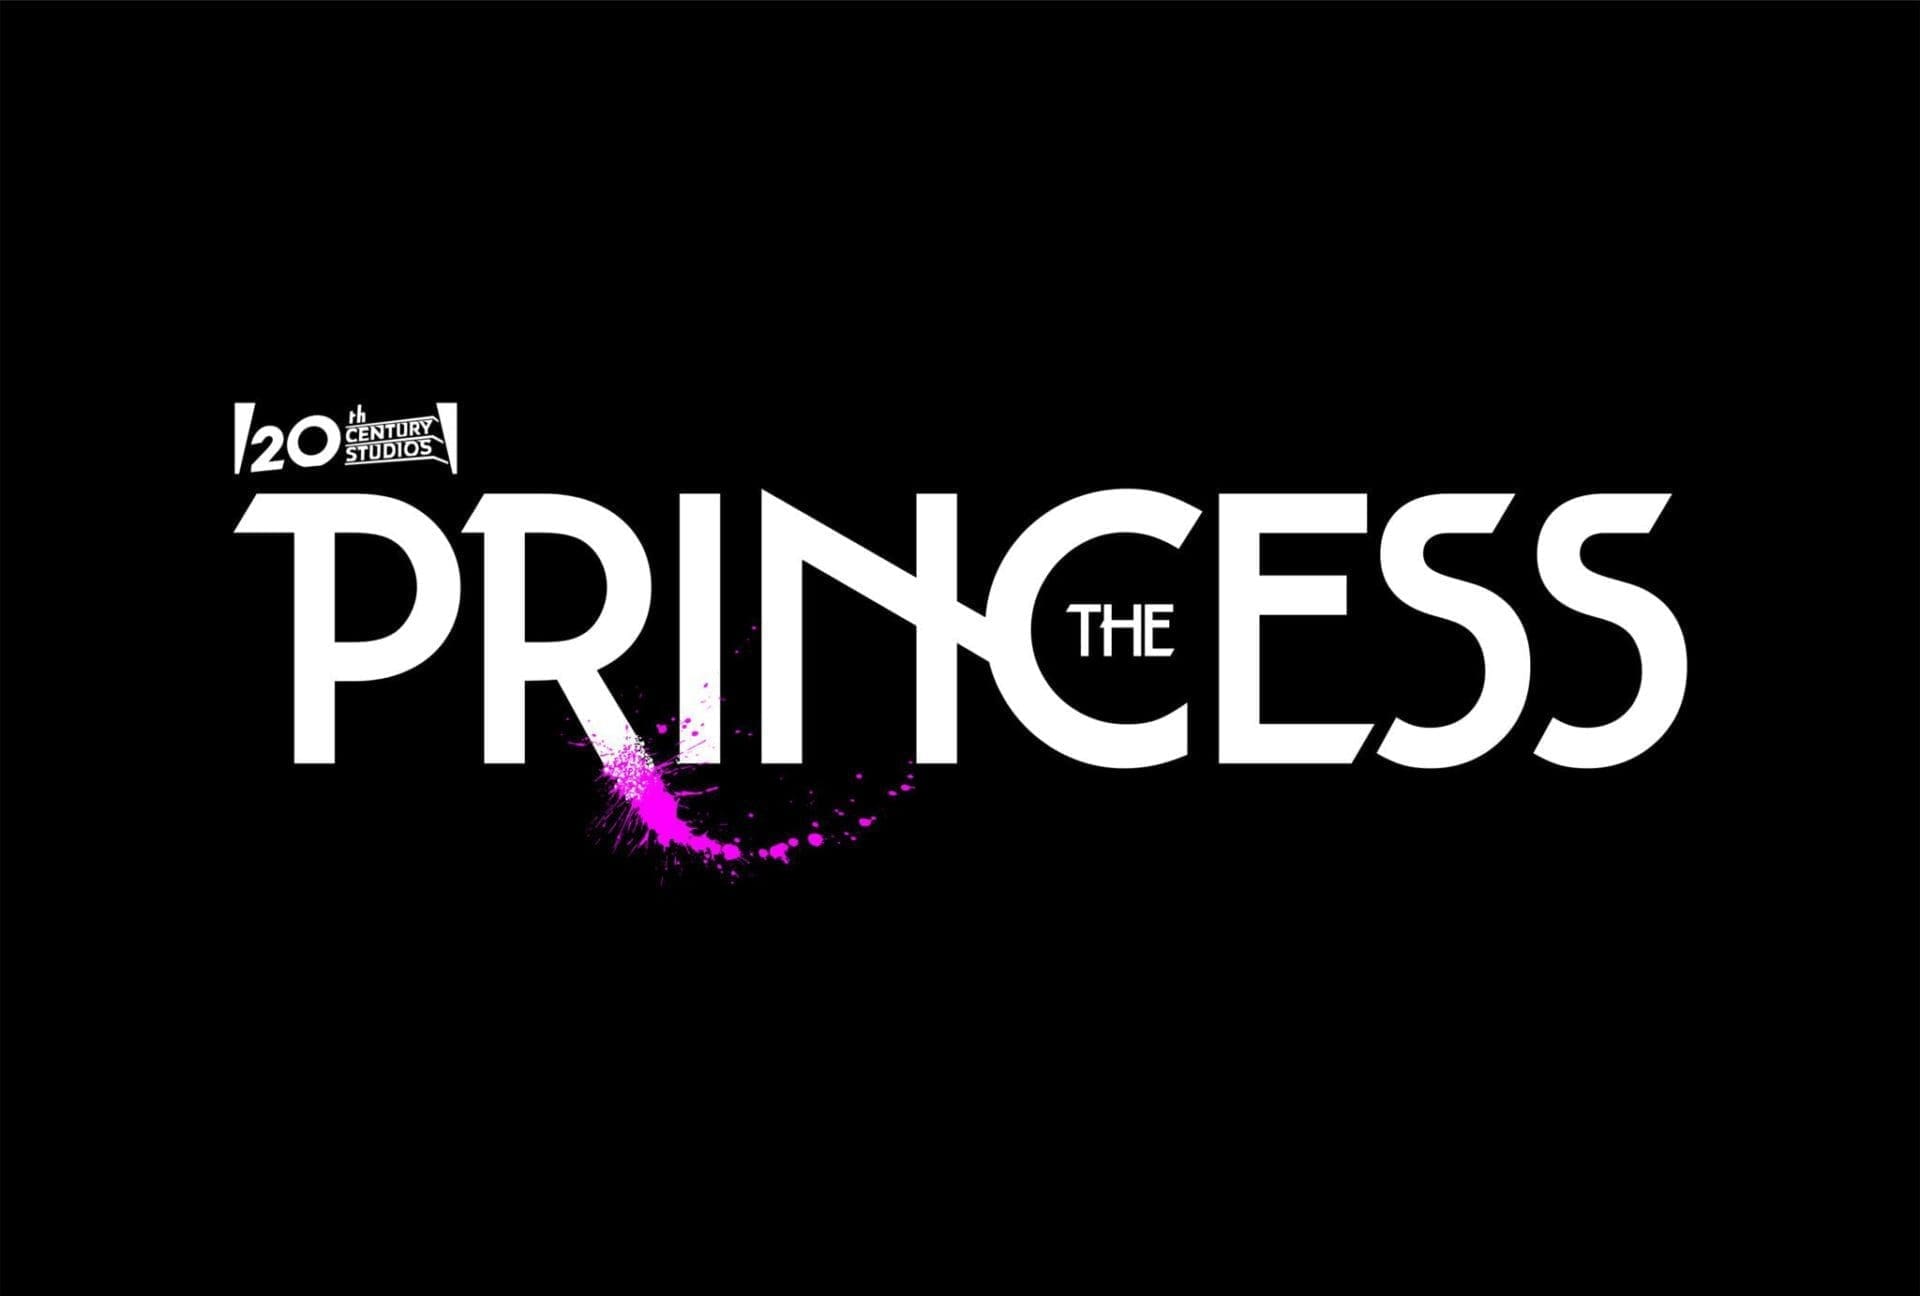 the_princess_logo_wht_on_blk_bkg_421d8402.jpeg